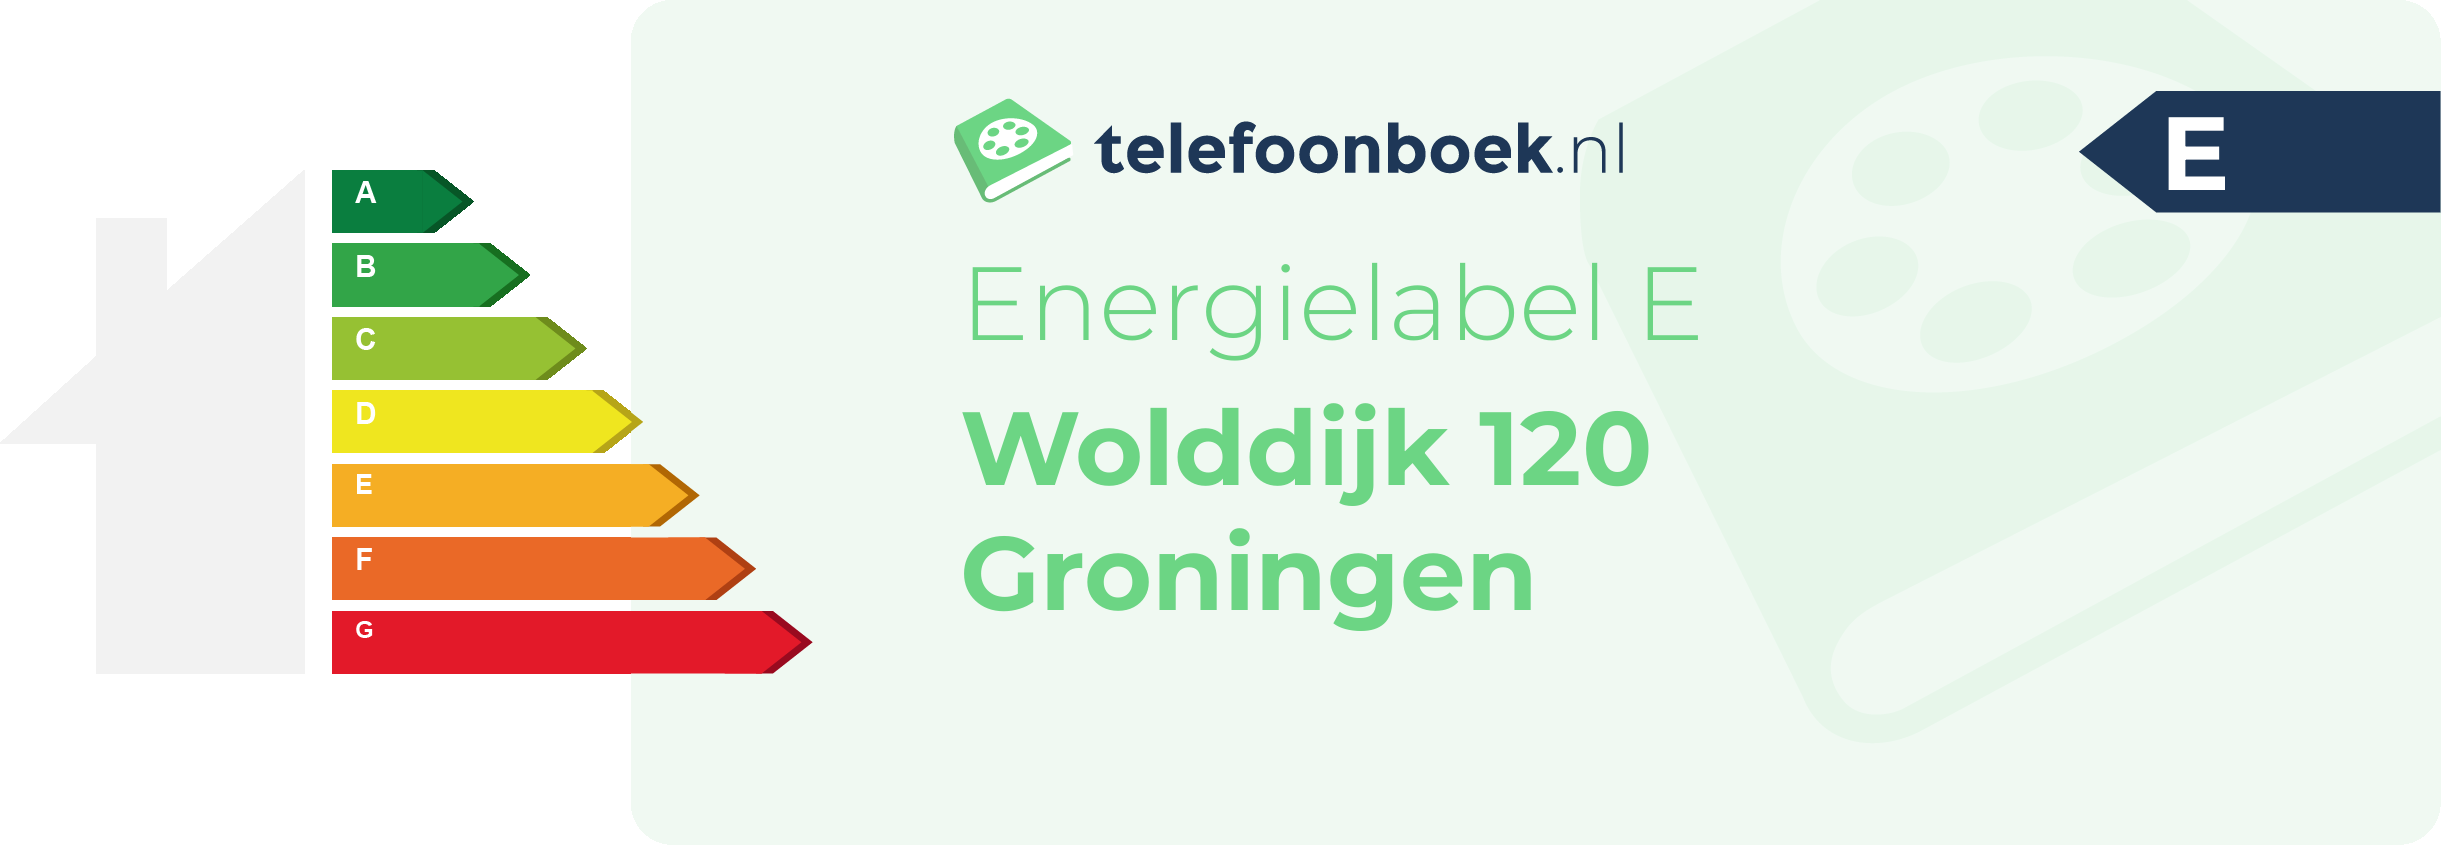 Energielabel Wolddijk 120 Groningen